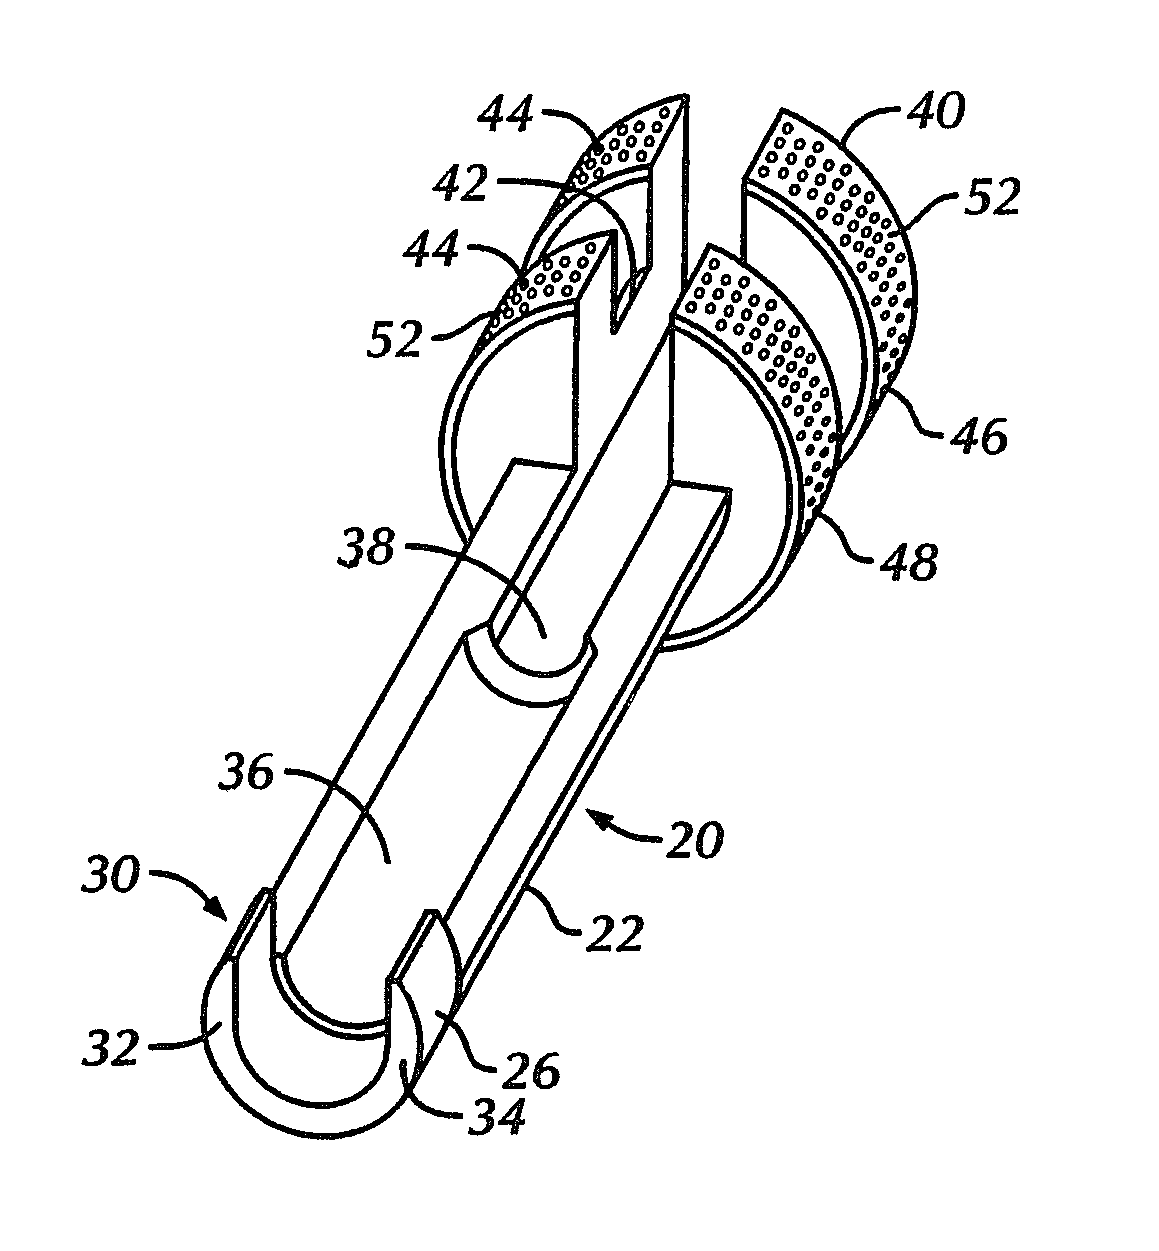 Wrench adaptor